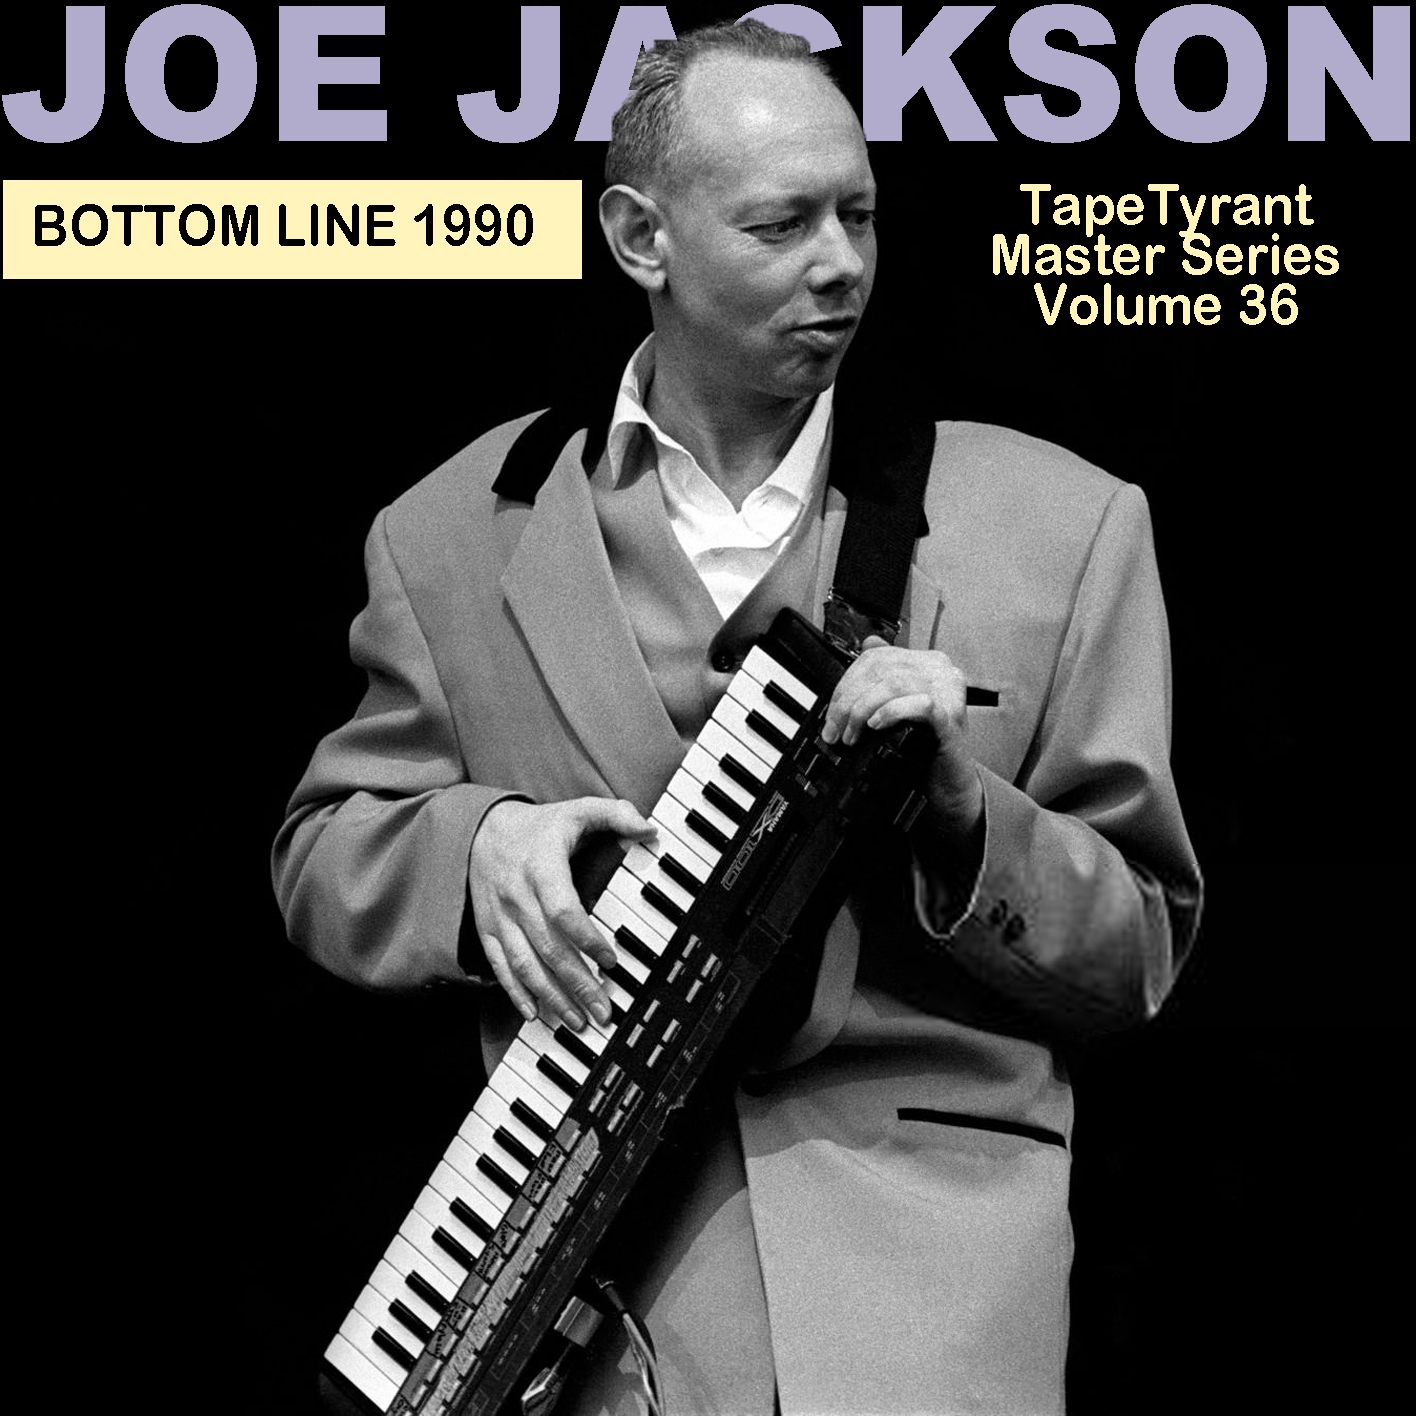 JoeJackson1990-10-20LateBottomLineNYC (2).jpg